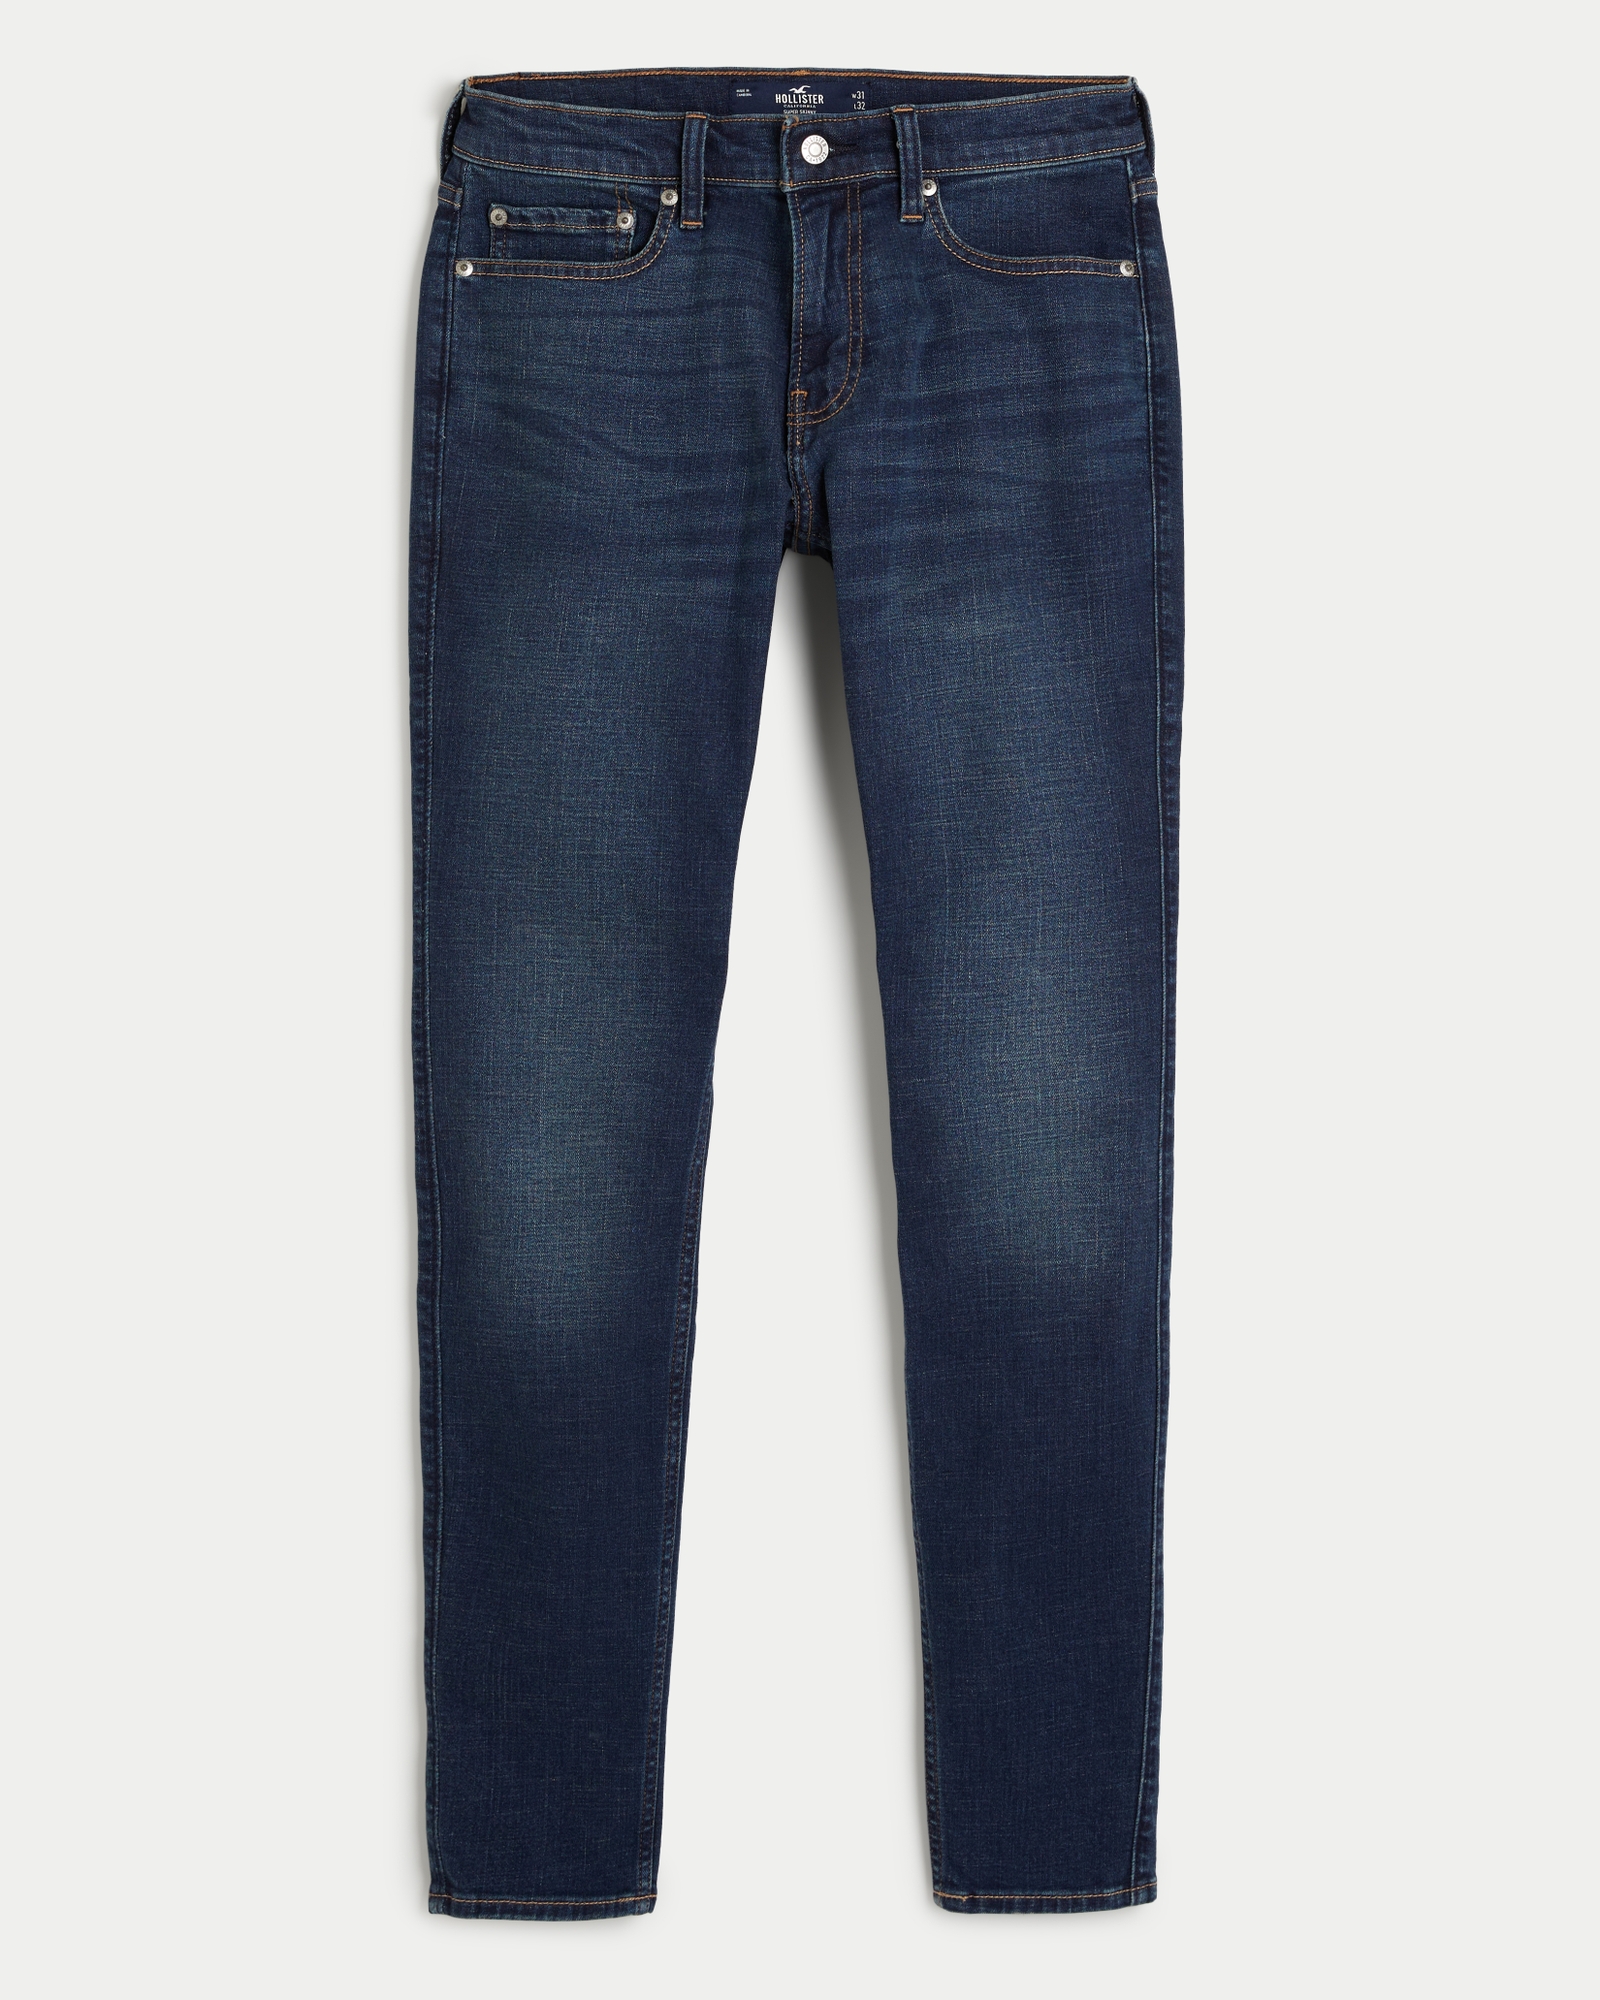 Men, Redbat jeans ,New ,never worn ,size 30